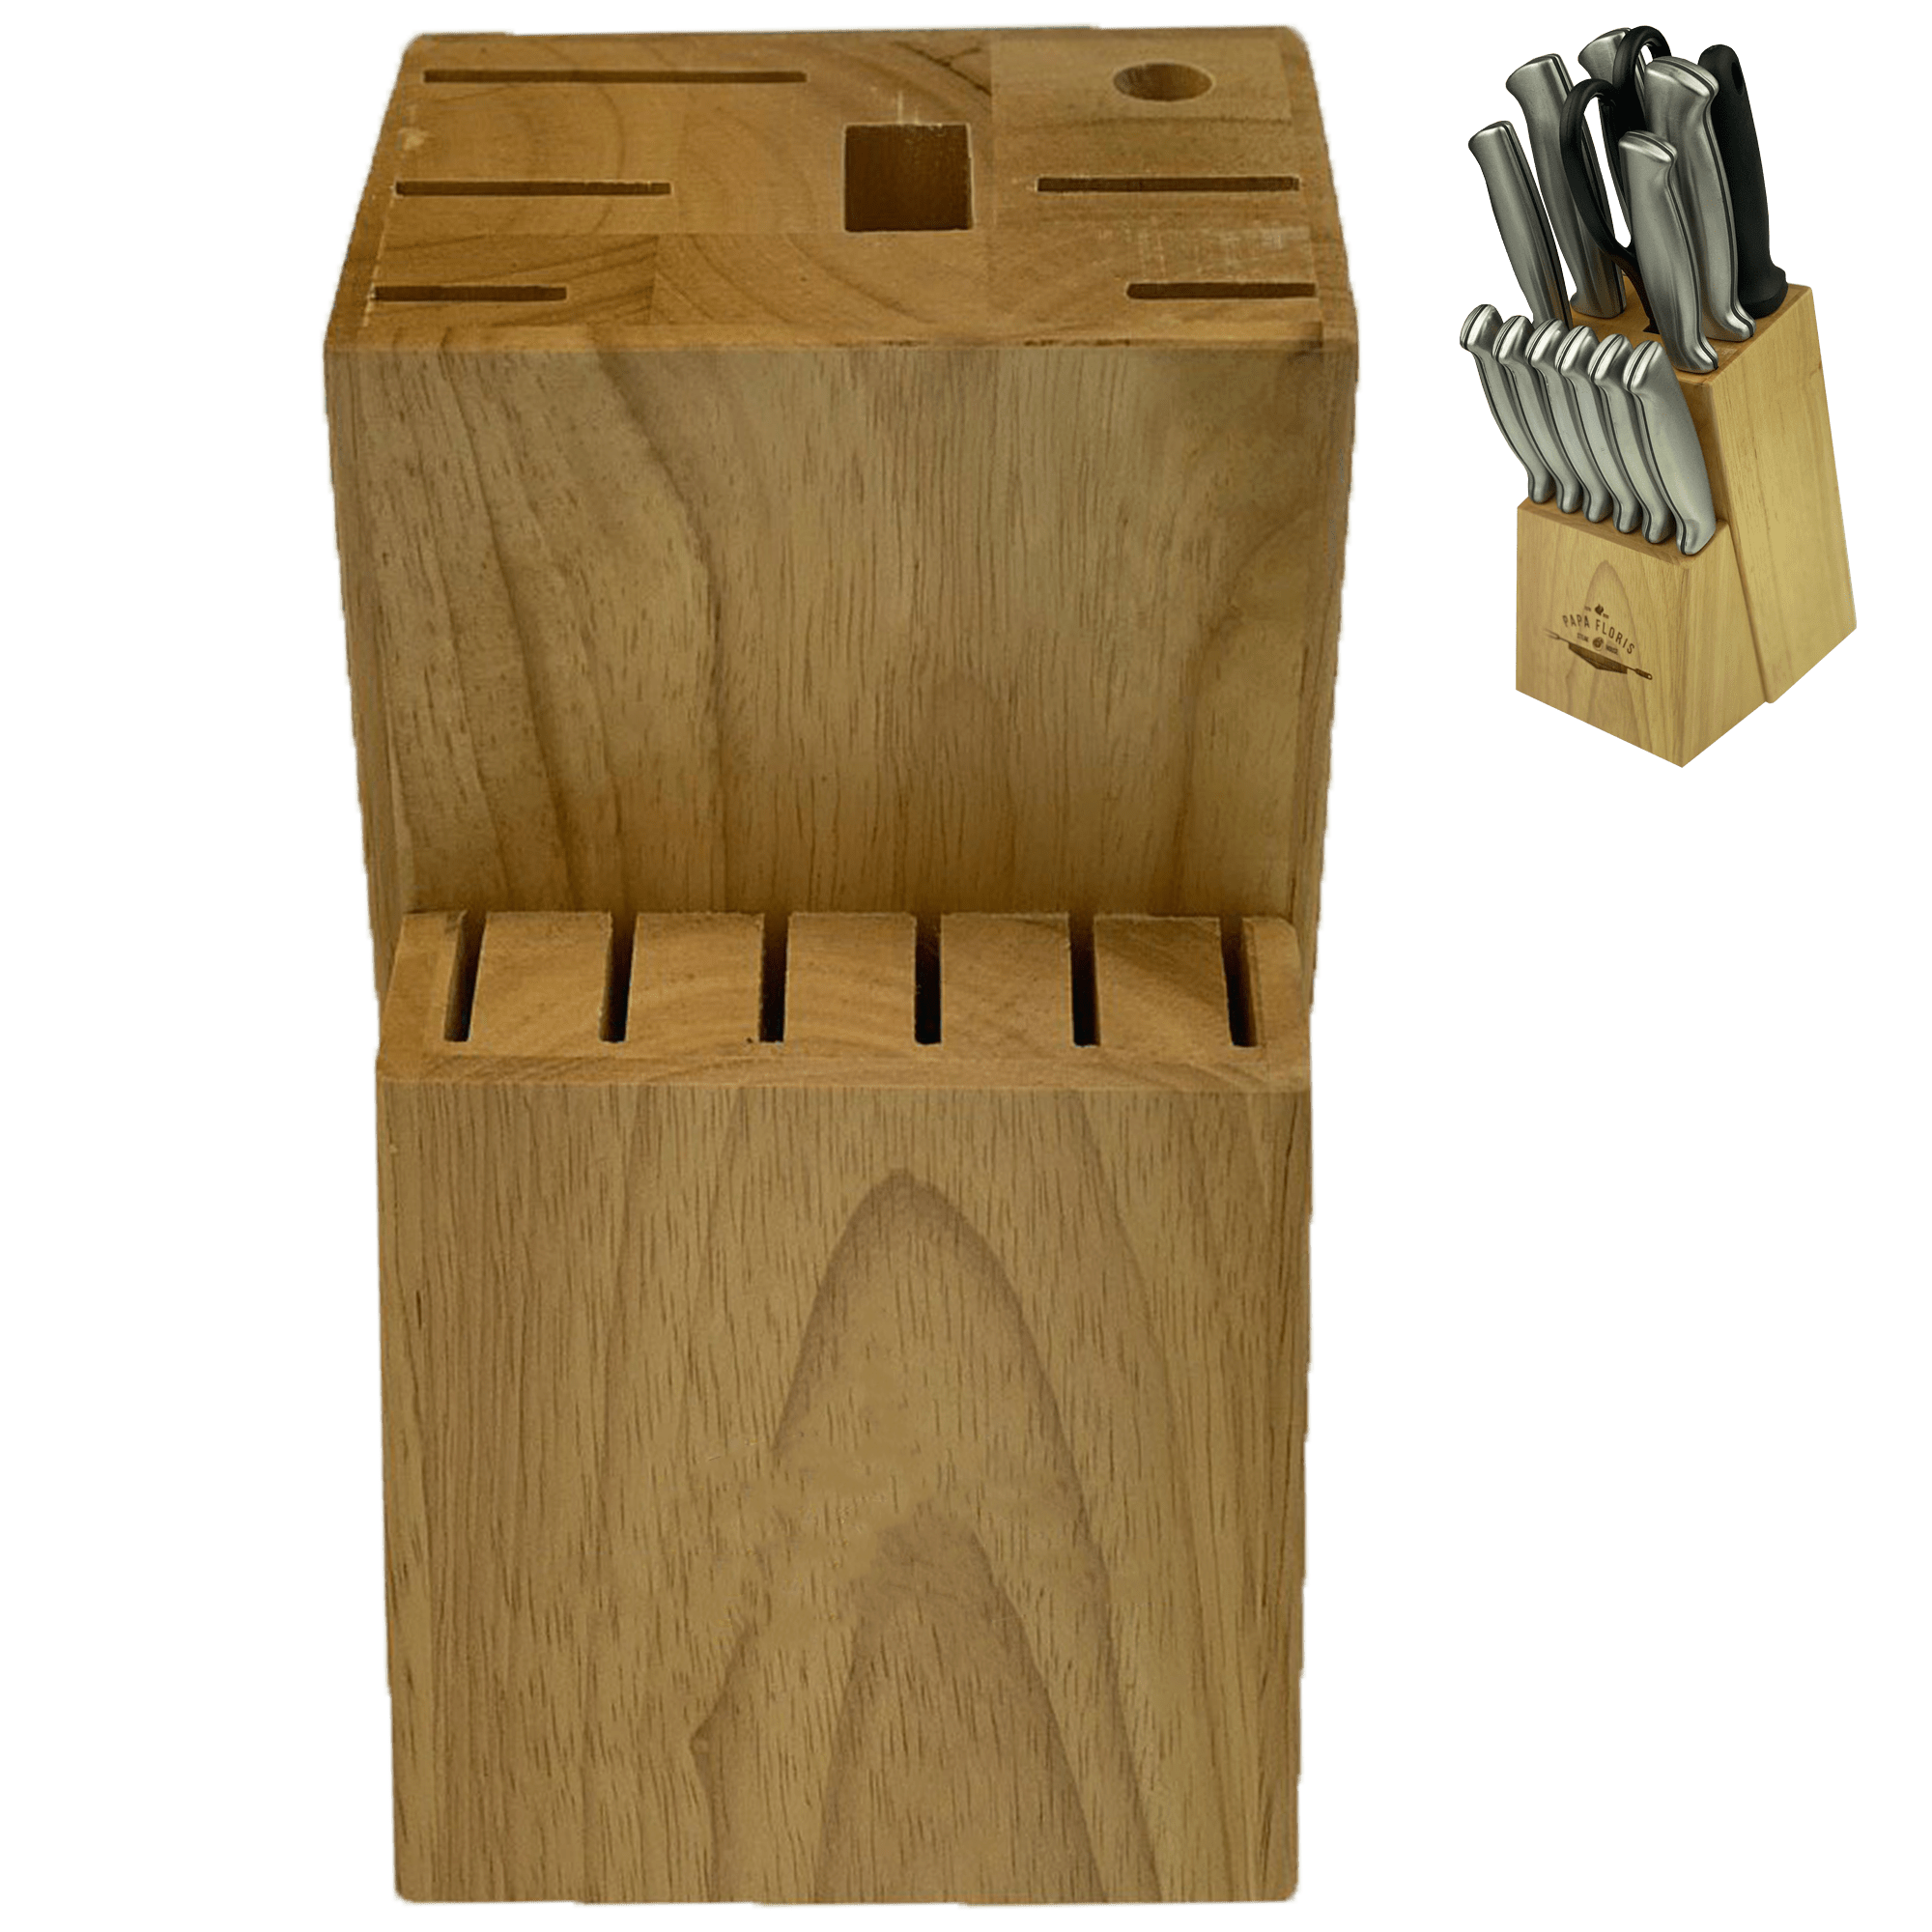 Wooden knife block